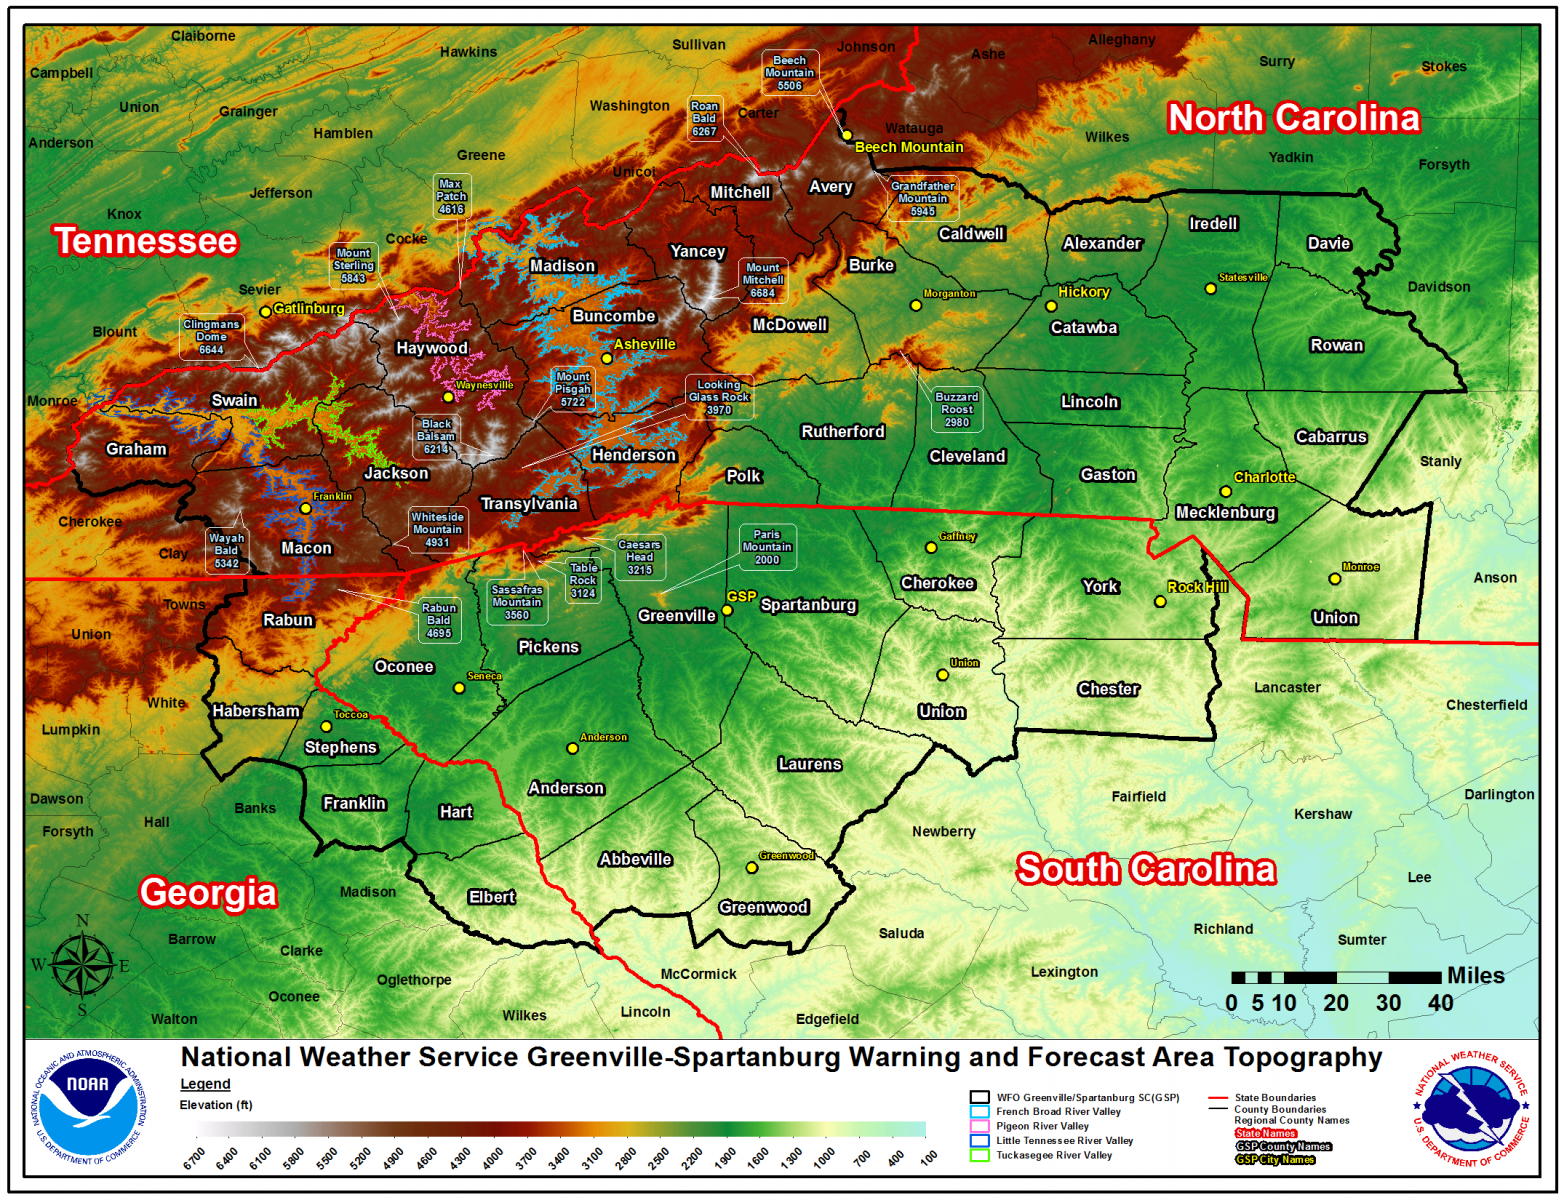 Tornadoes Across the Western Piedmont From The Carolinas/Virginia Outbreak of 16 April ...